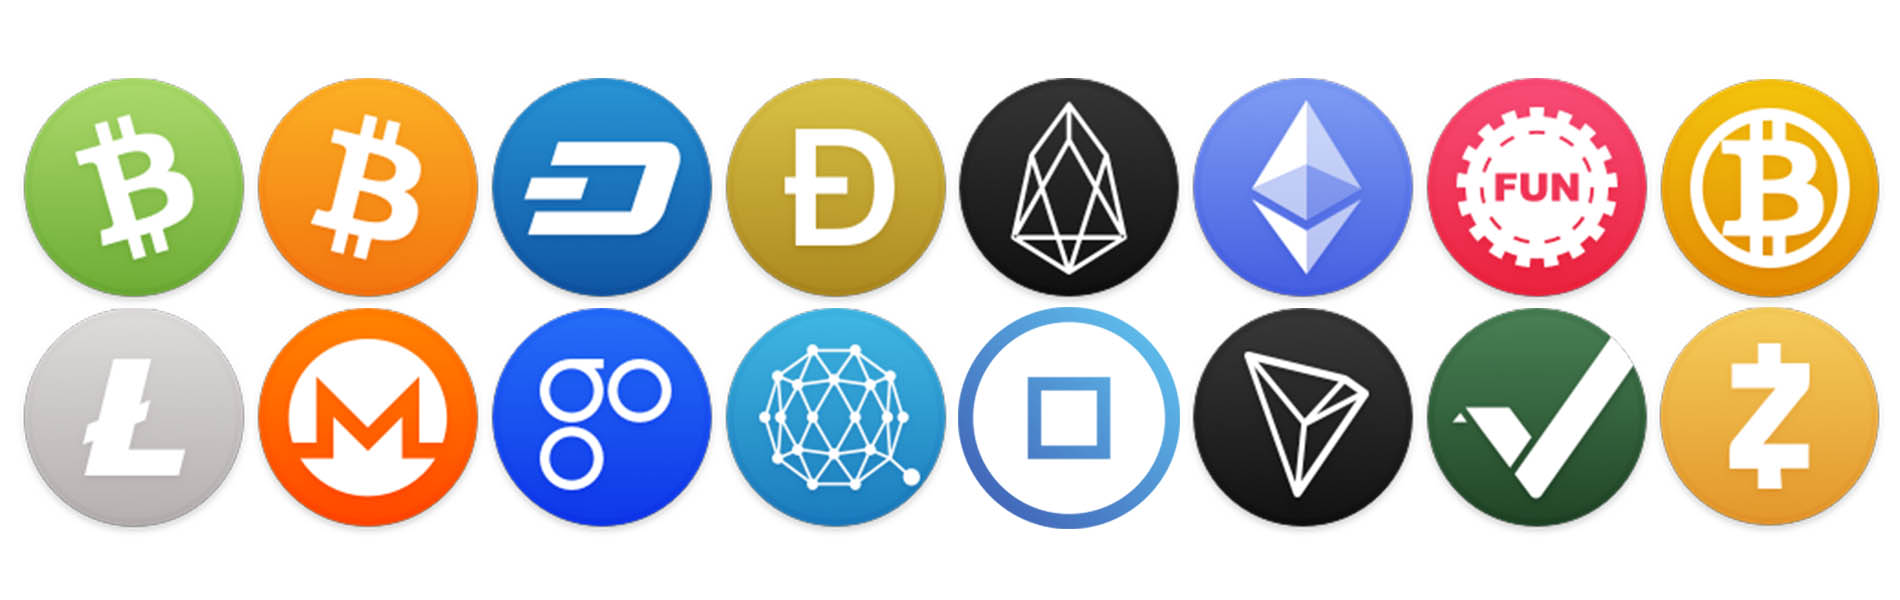 Cryptocurrency symbols for facebook illuminati coin crypto